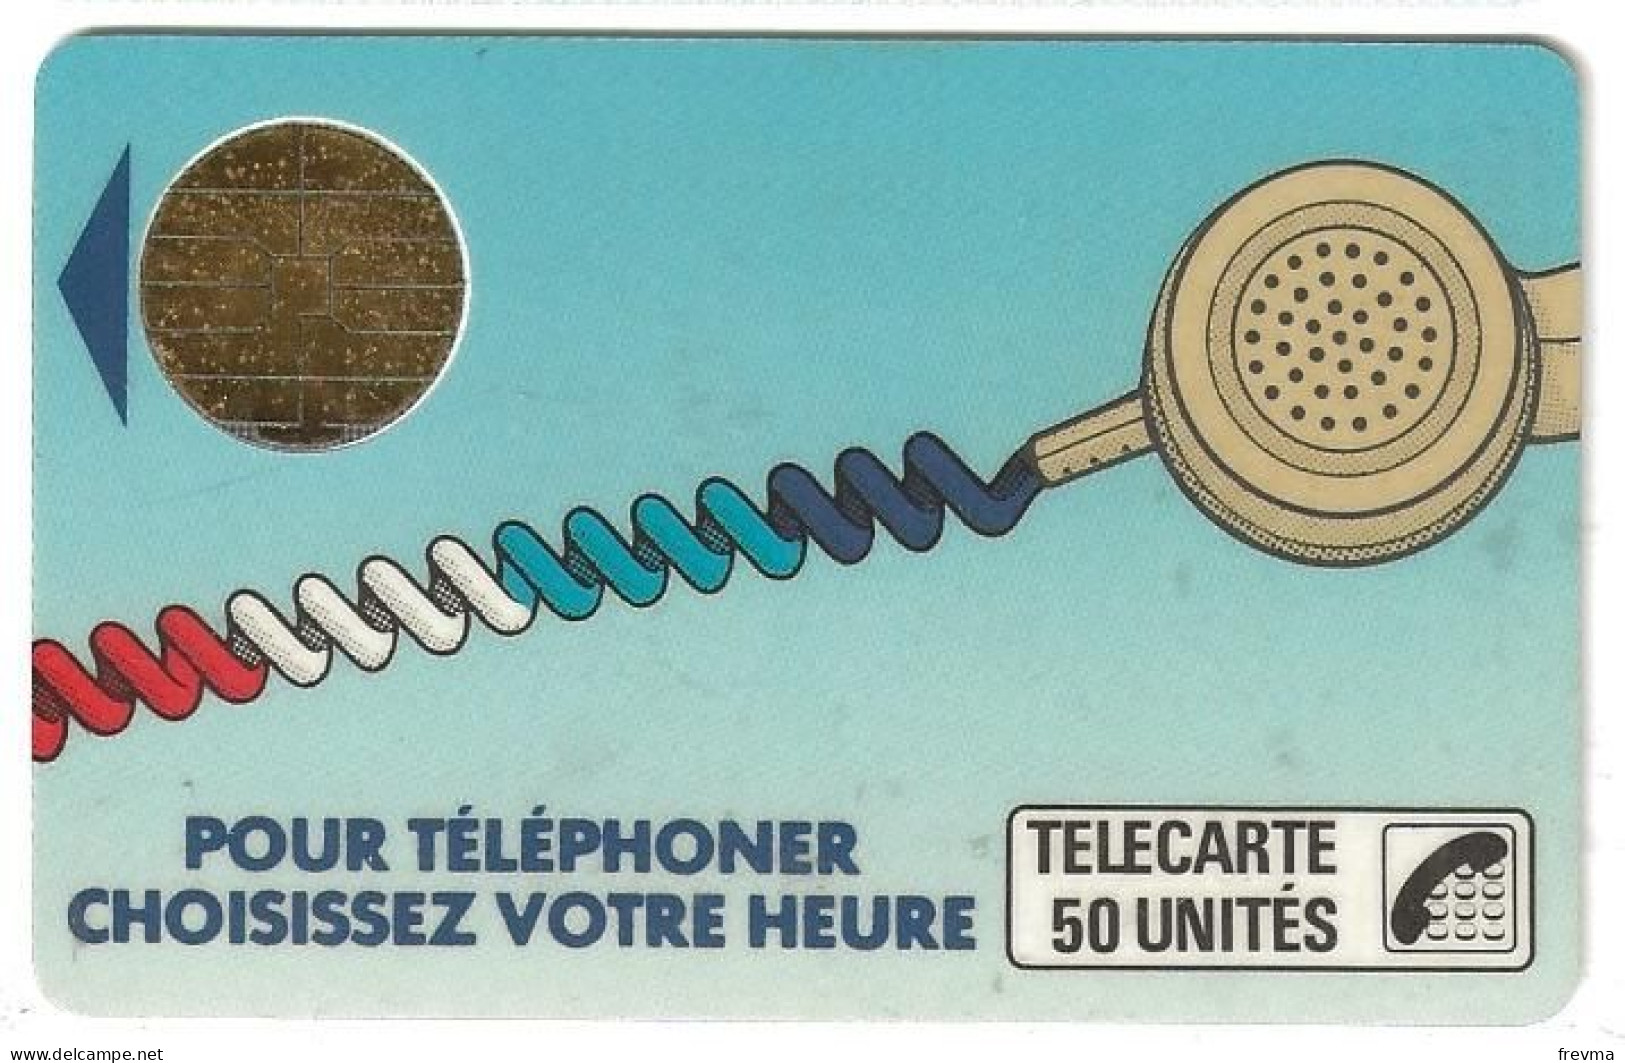 Telecarte K 42B 50 Unités Bul 1 - Telefonschnur (Cordon)